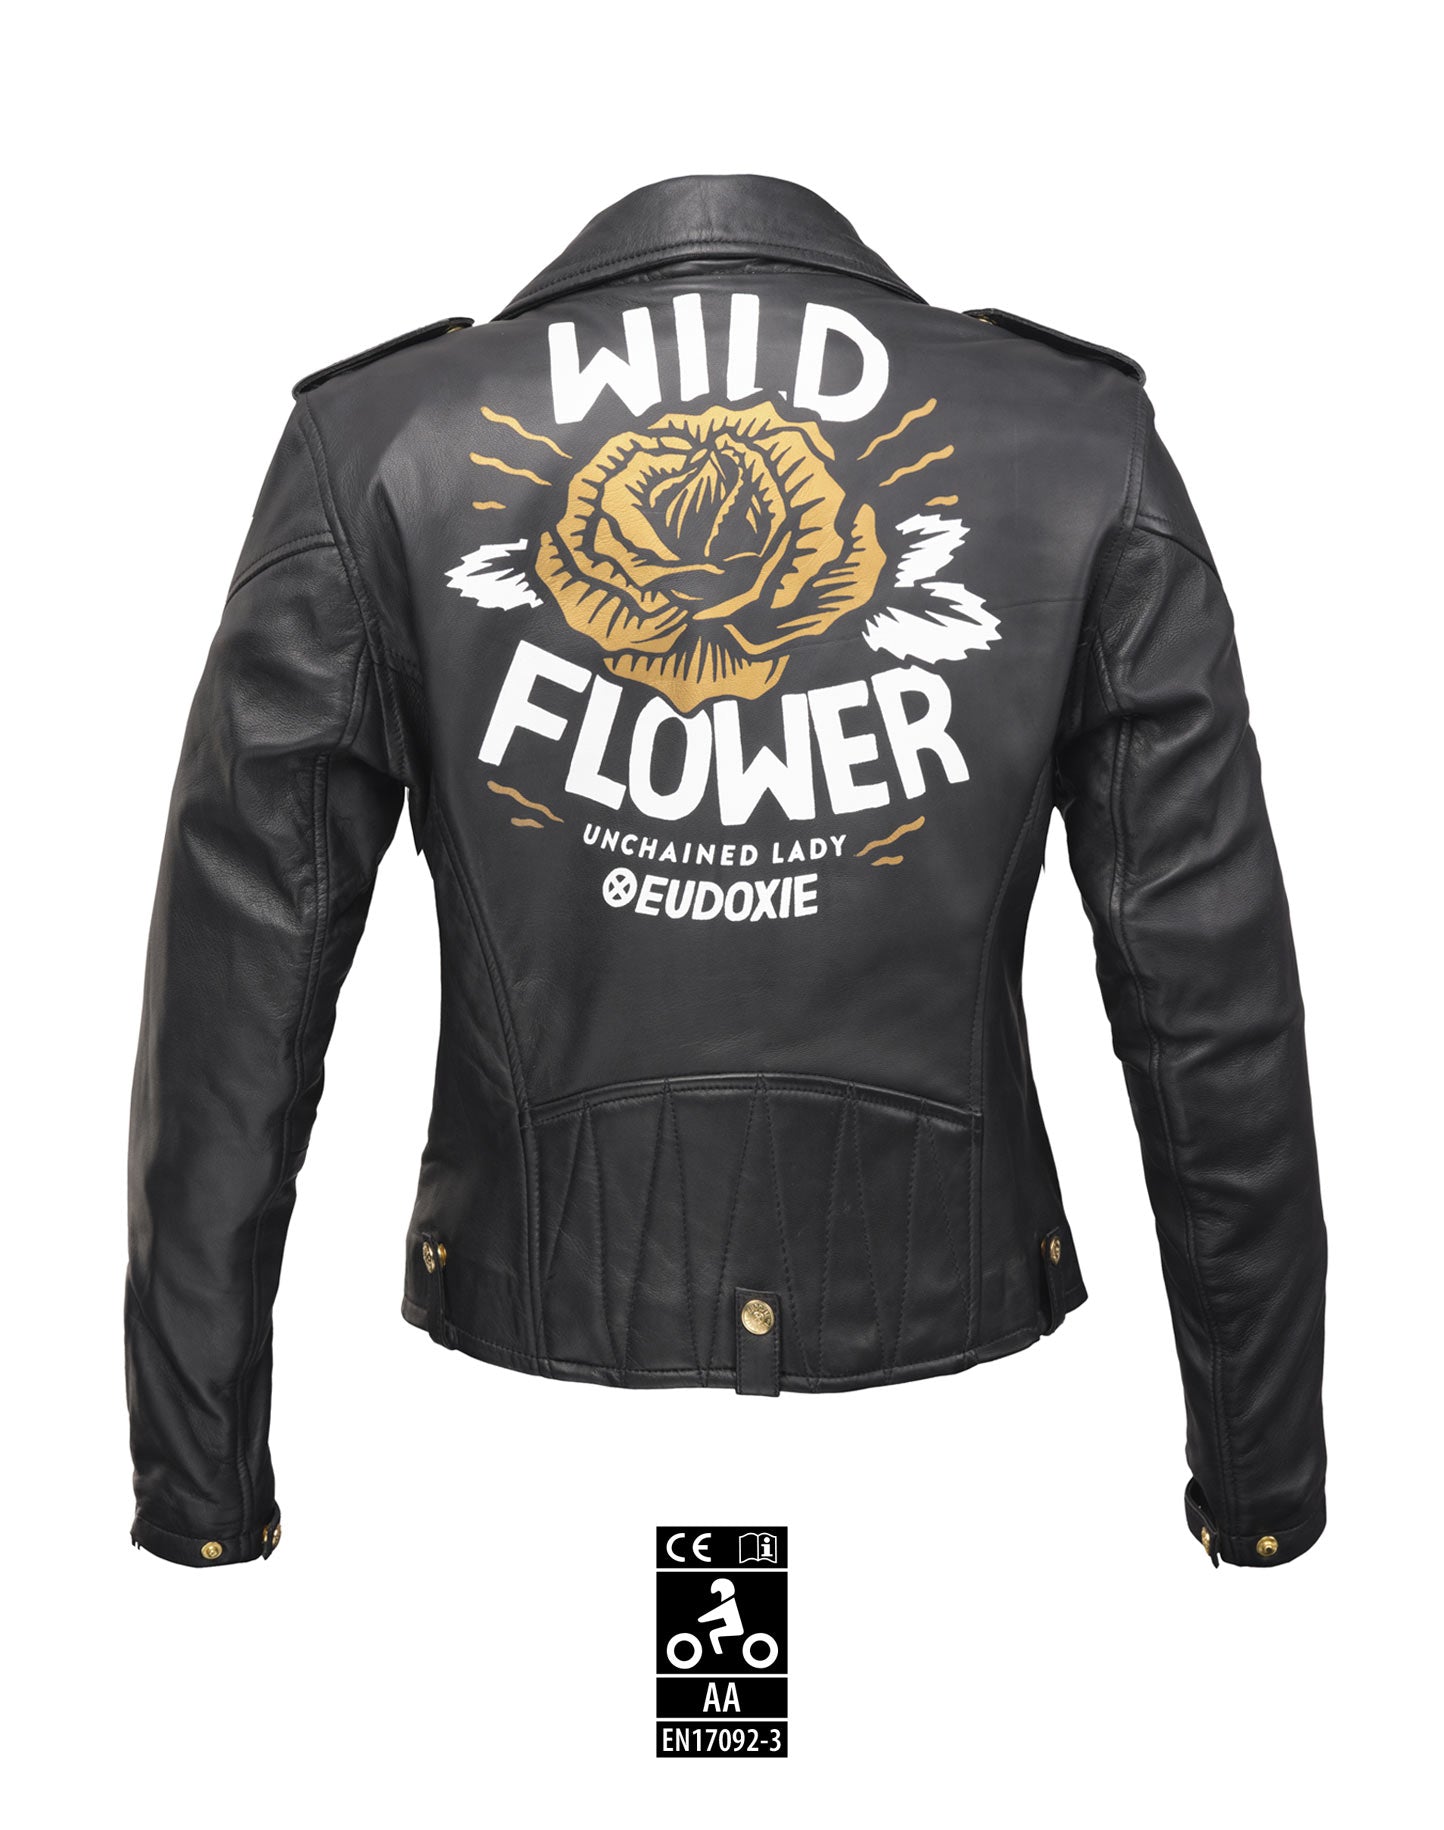 Women's motorcycle leather jacket SUZY - Wild Flower